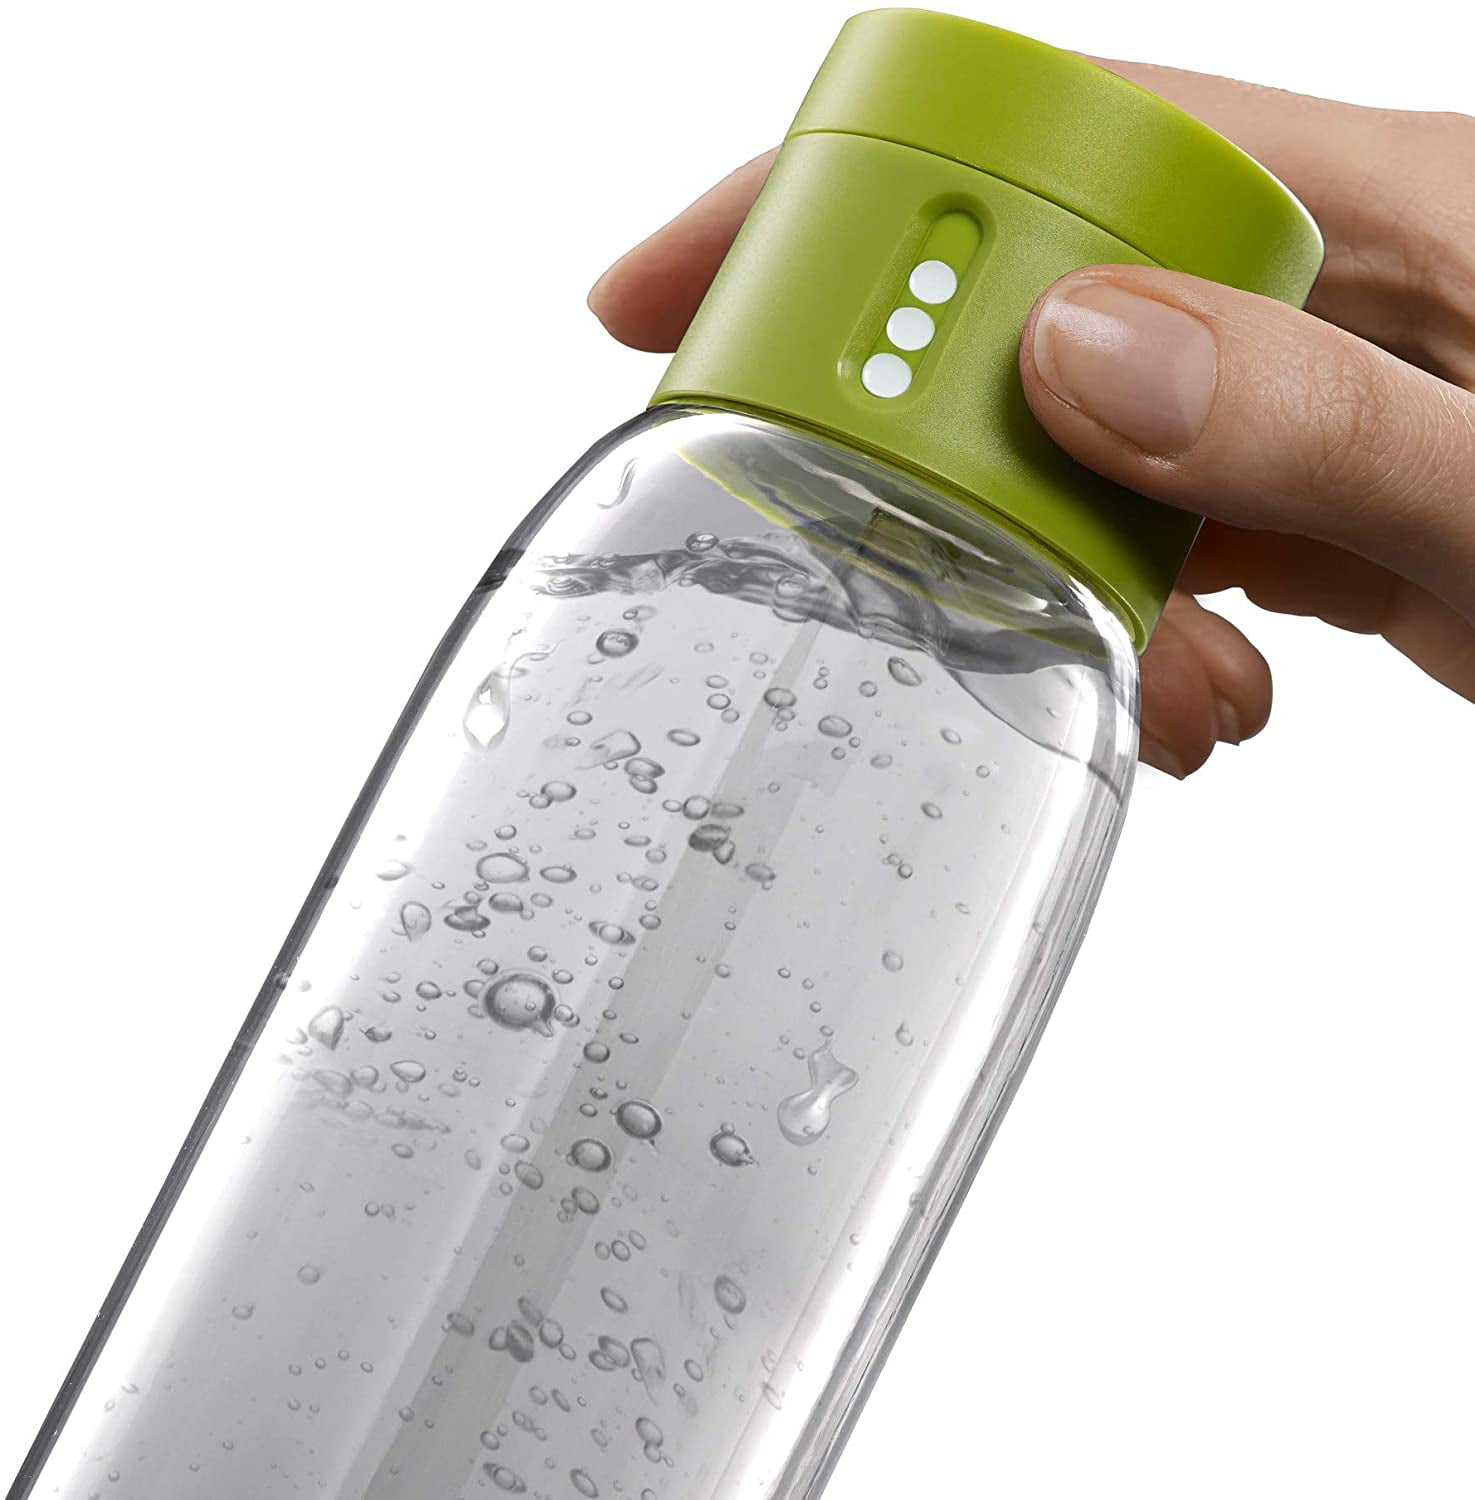 Joseph Joseph Dot Hydration-Tracking Water Bottle Counts Water Intake 